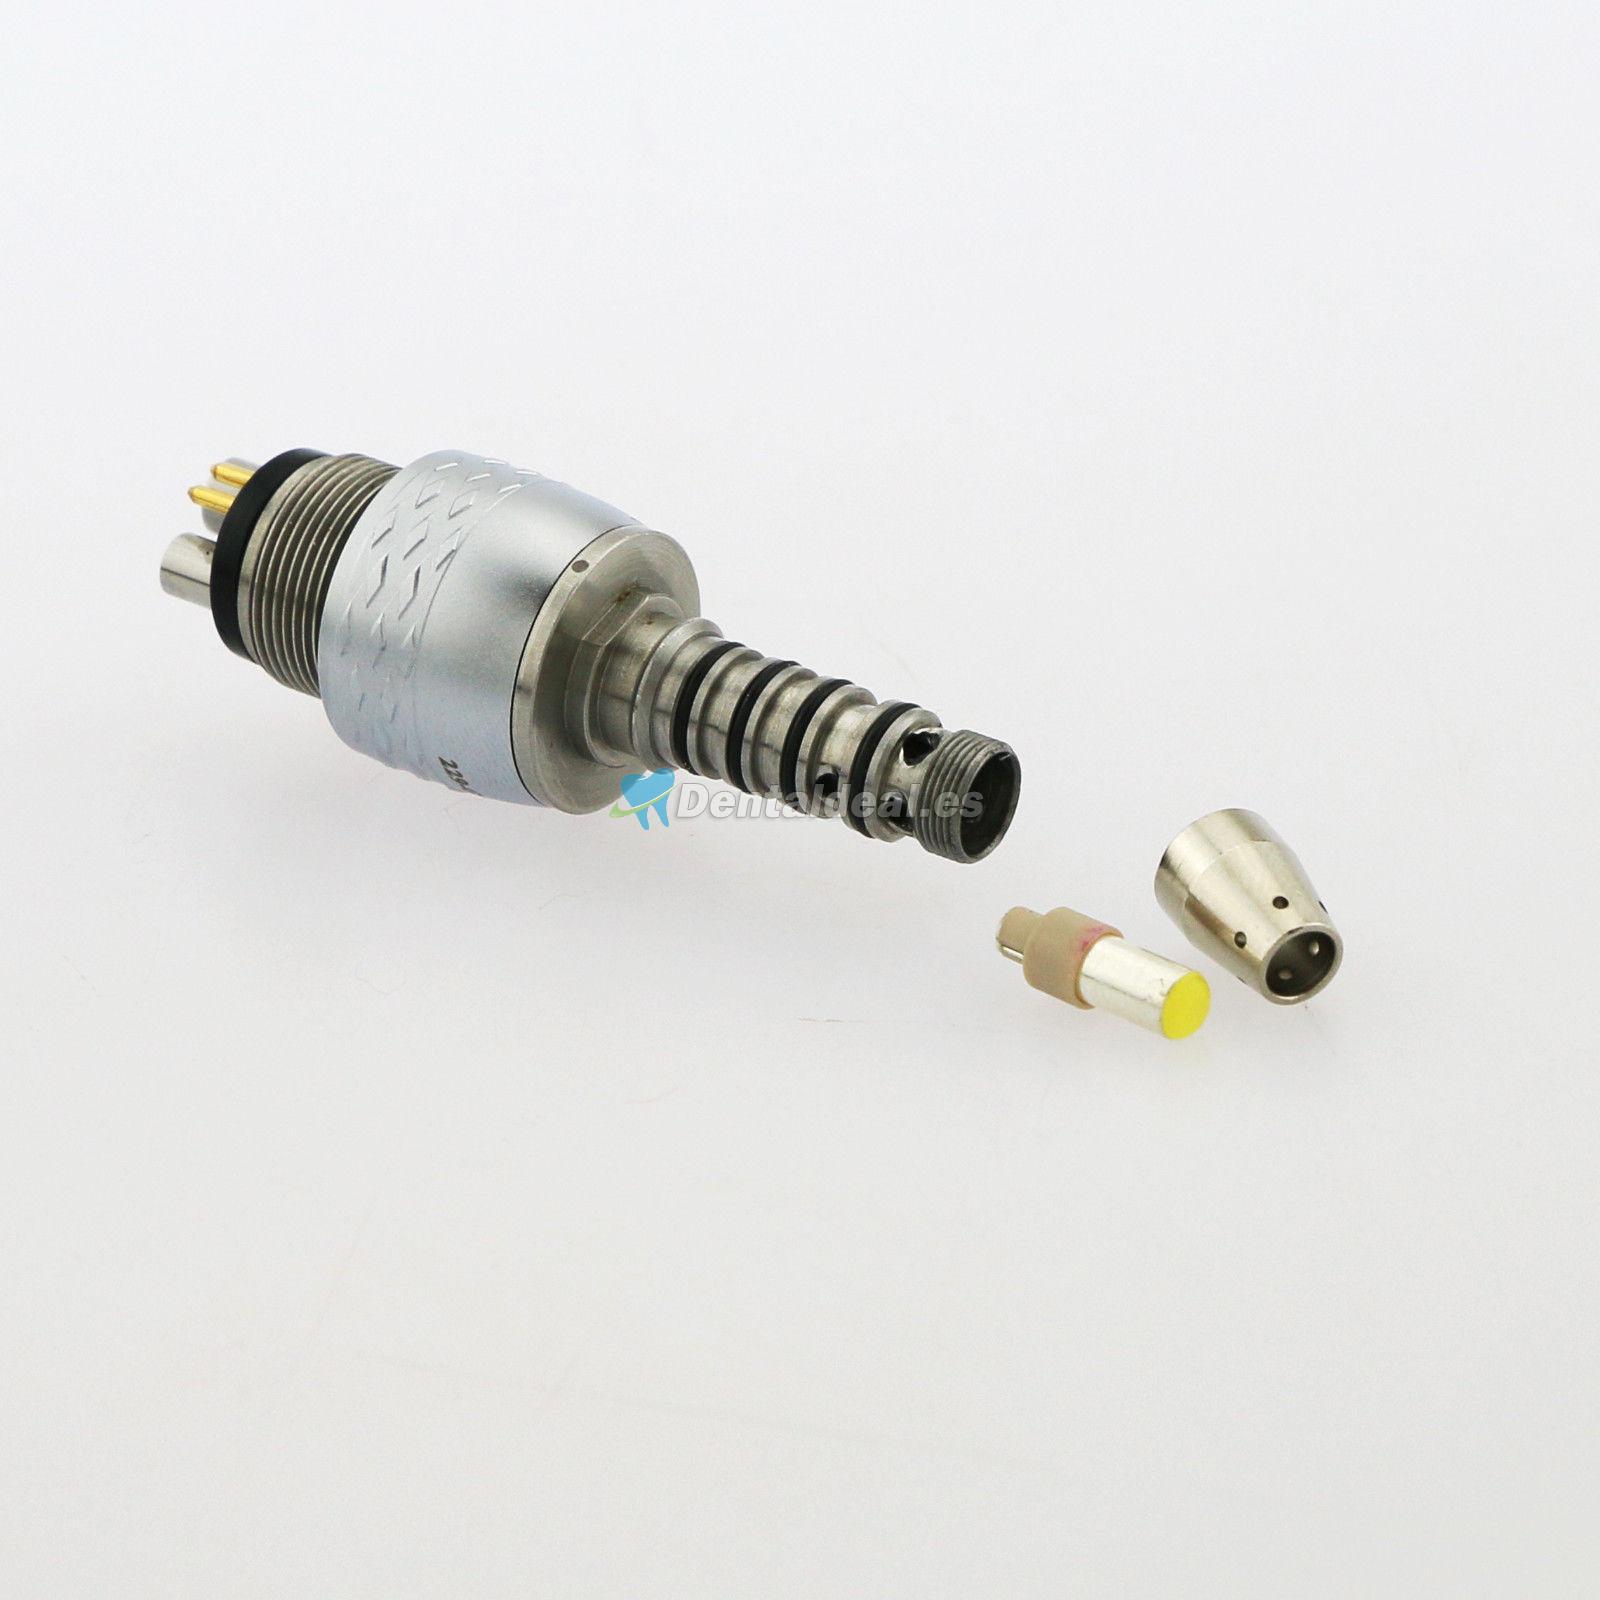 YUSENDENT CX229-GS Sirona tipo Dental LED Acoplamiento rápido Fit Sirona R / F